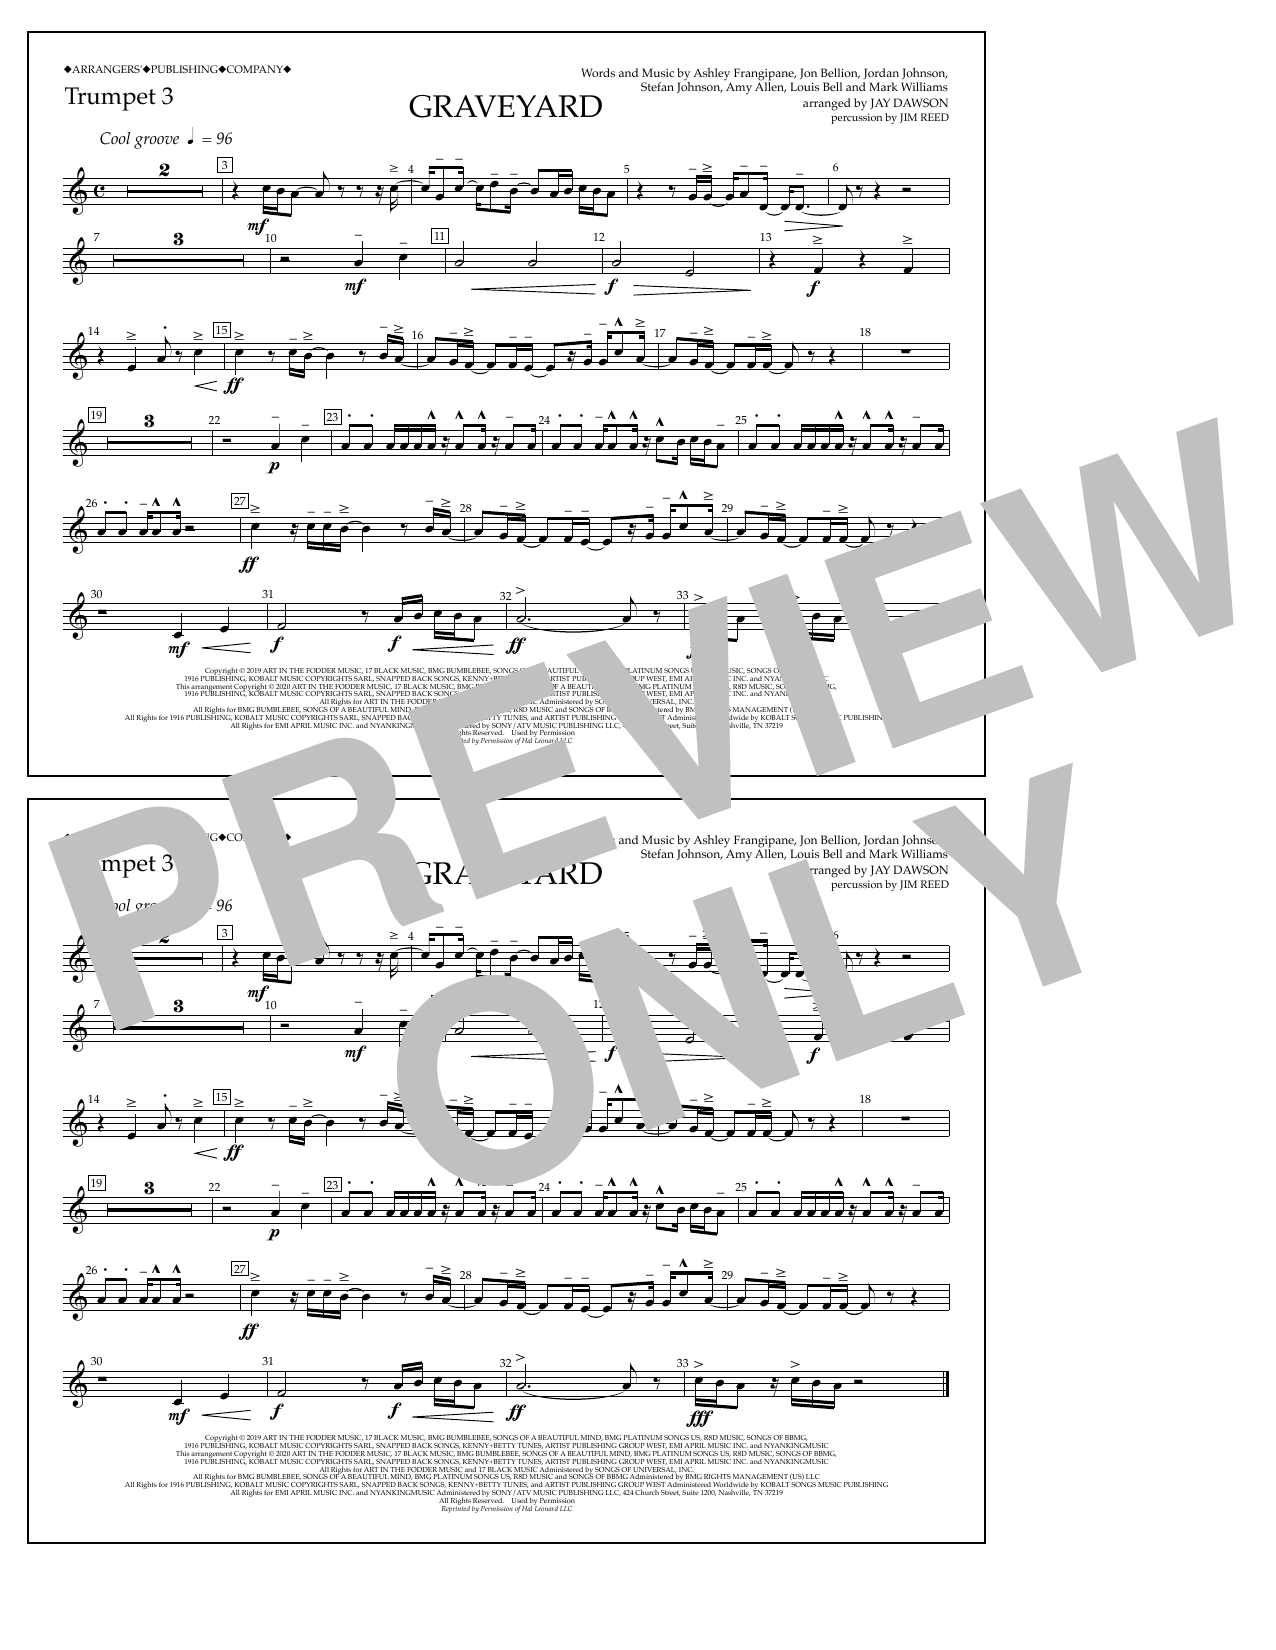 Download Halsey Graveyard (arr. Jay Dawson) - Trumpet 3 Sheet Music